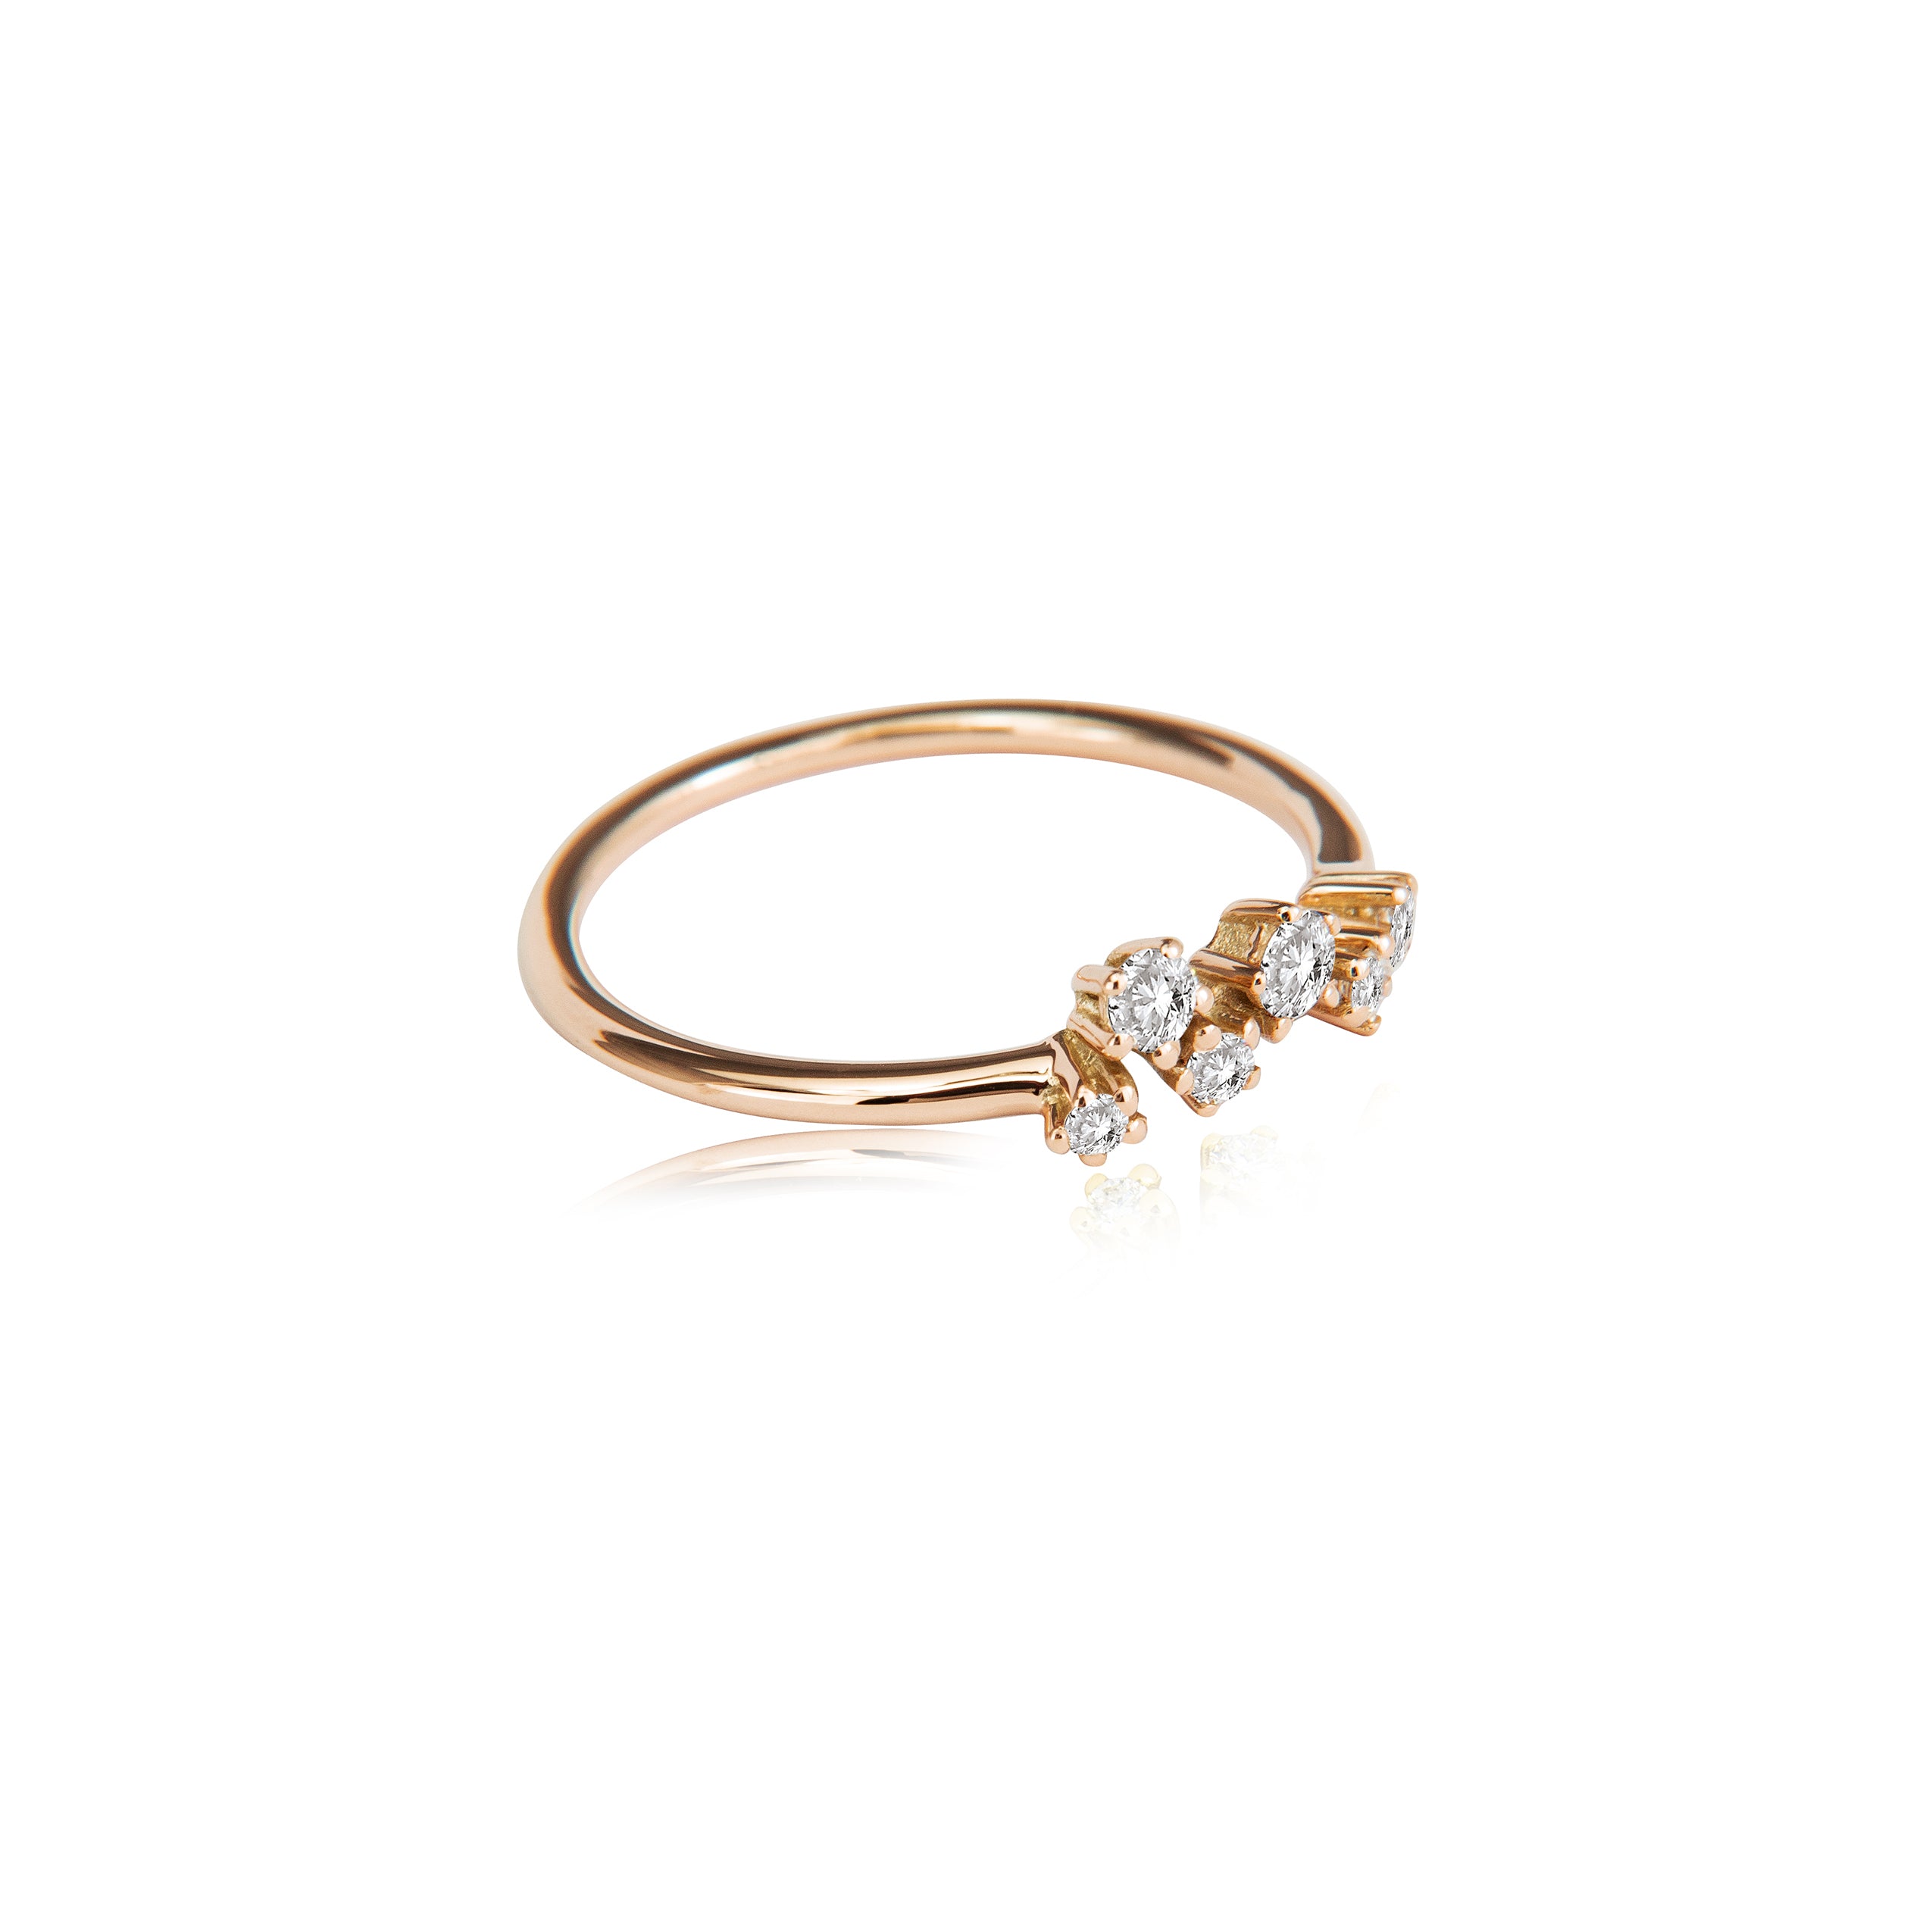 Sparkle ring "medium" in 585/- gold with 6 brilliant-cut diamonds